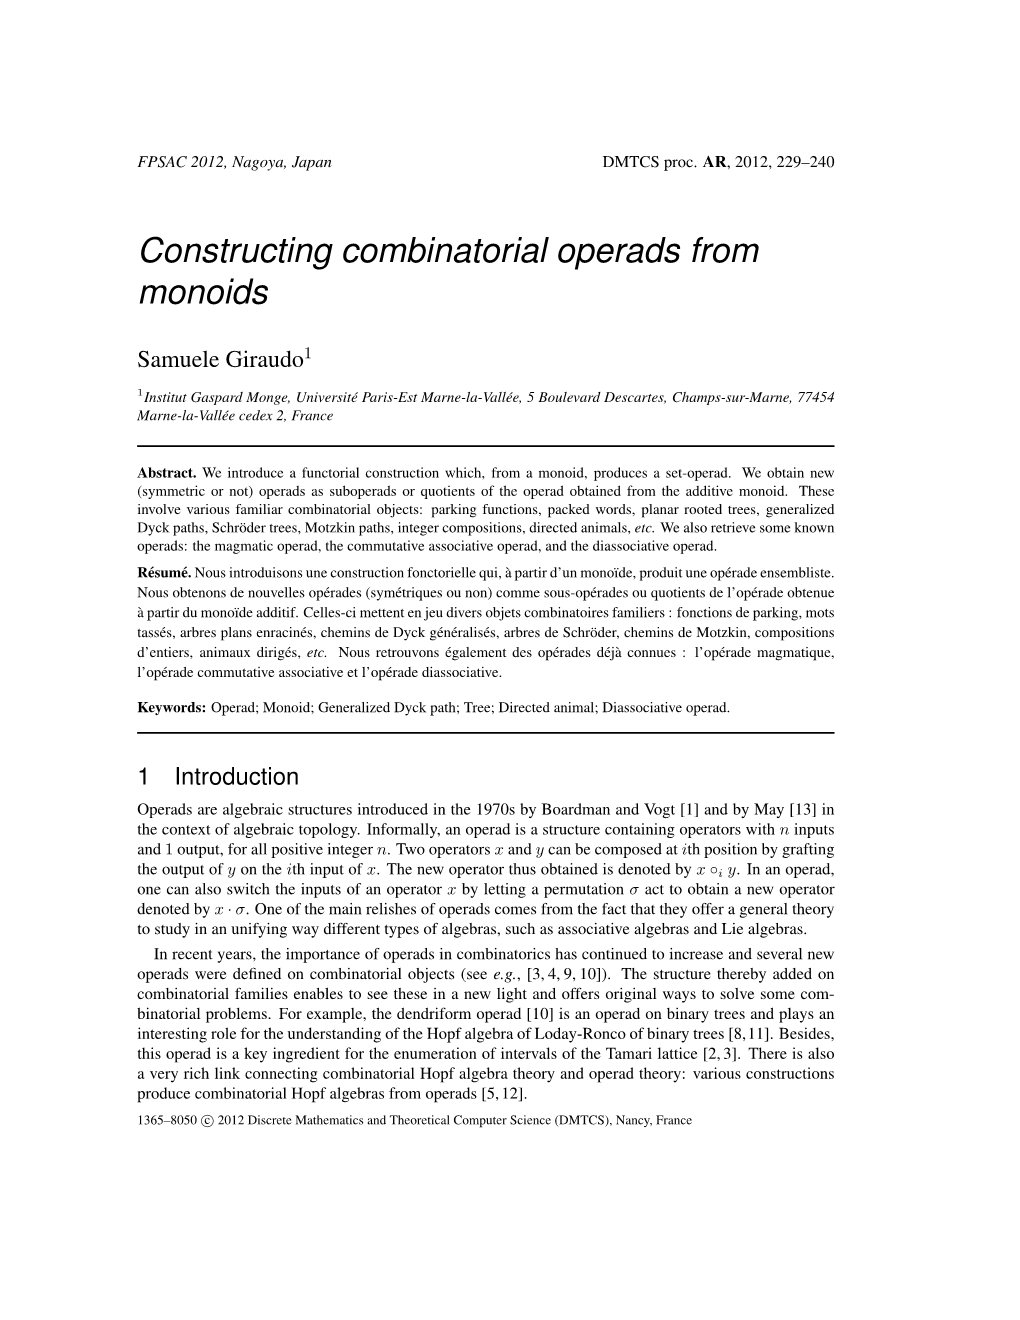 Constructing Combinatorial Operads from Monoids